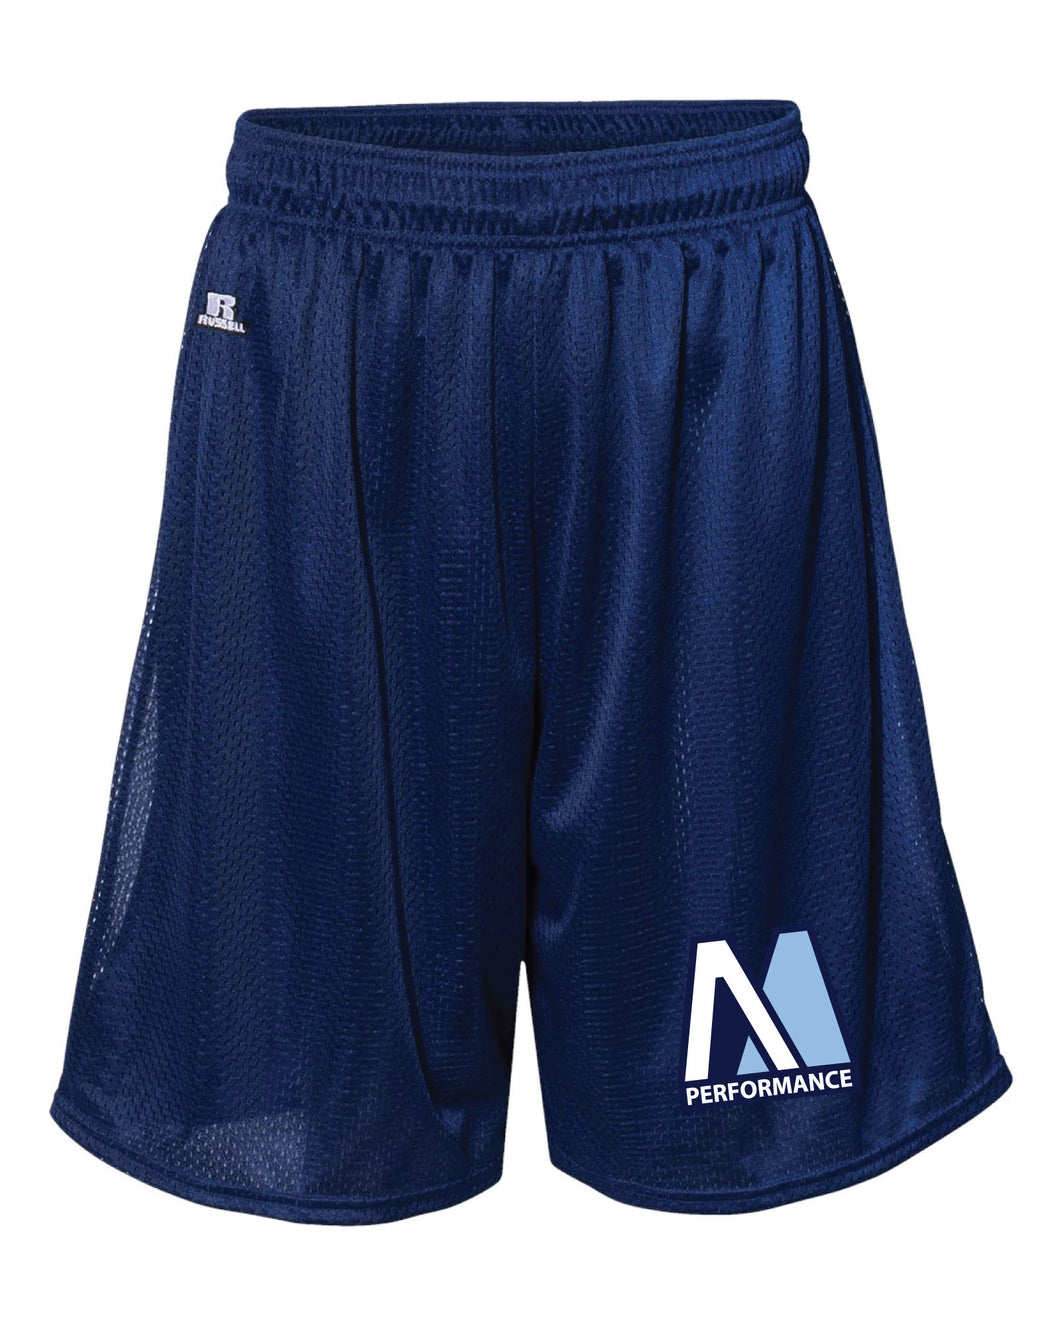 Leones Baseball Tech Shorts - Navy - 5KounT